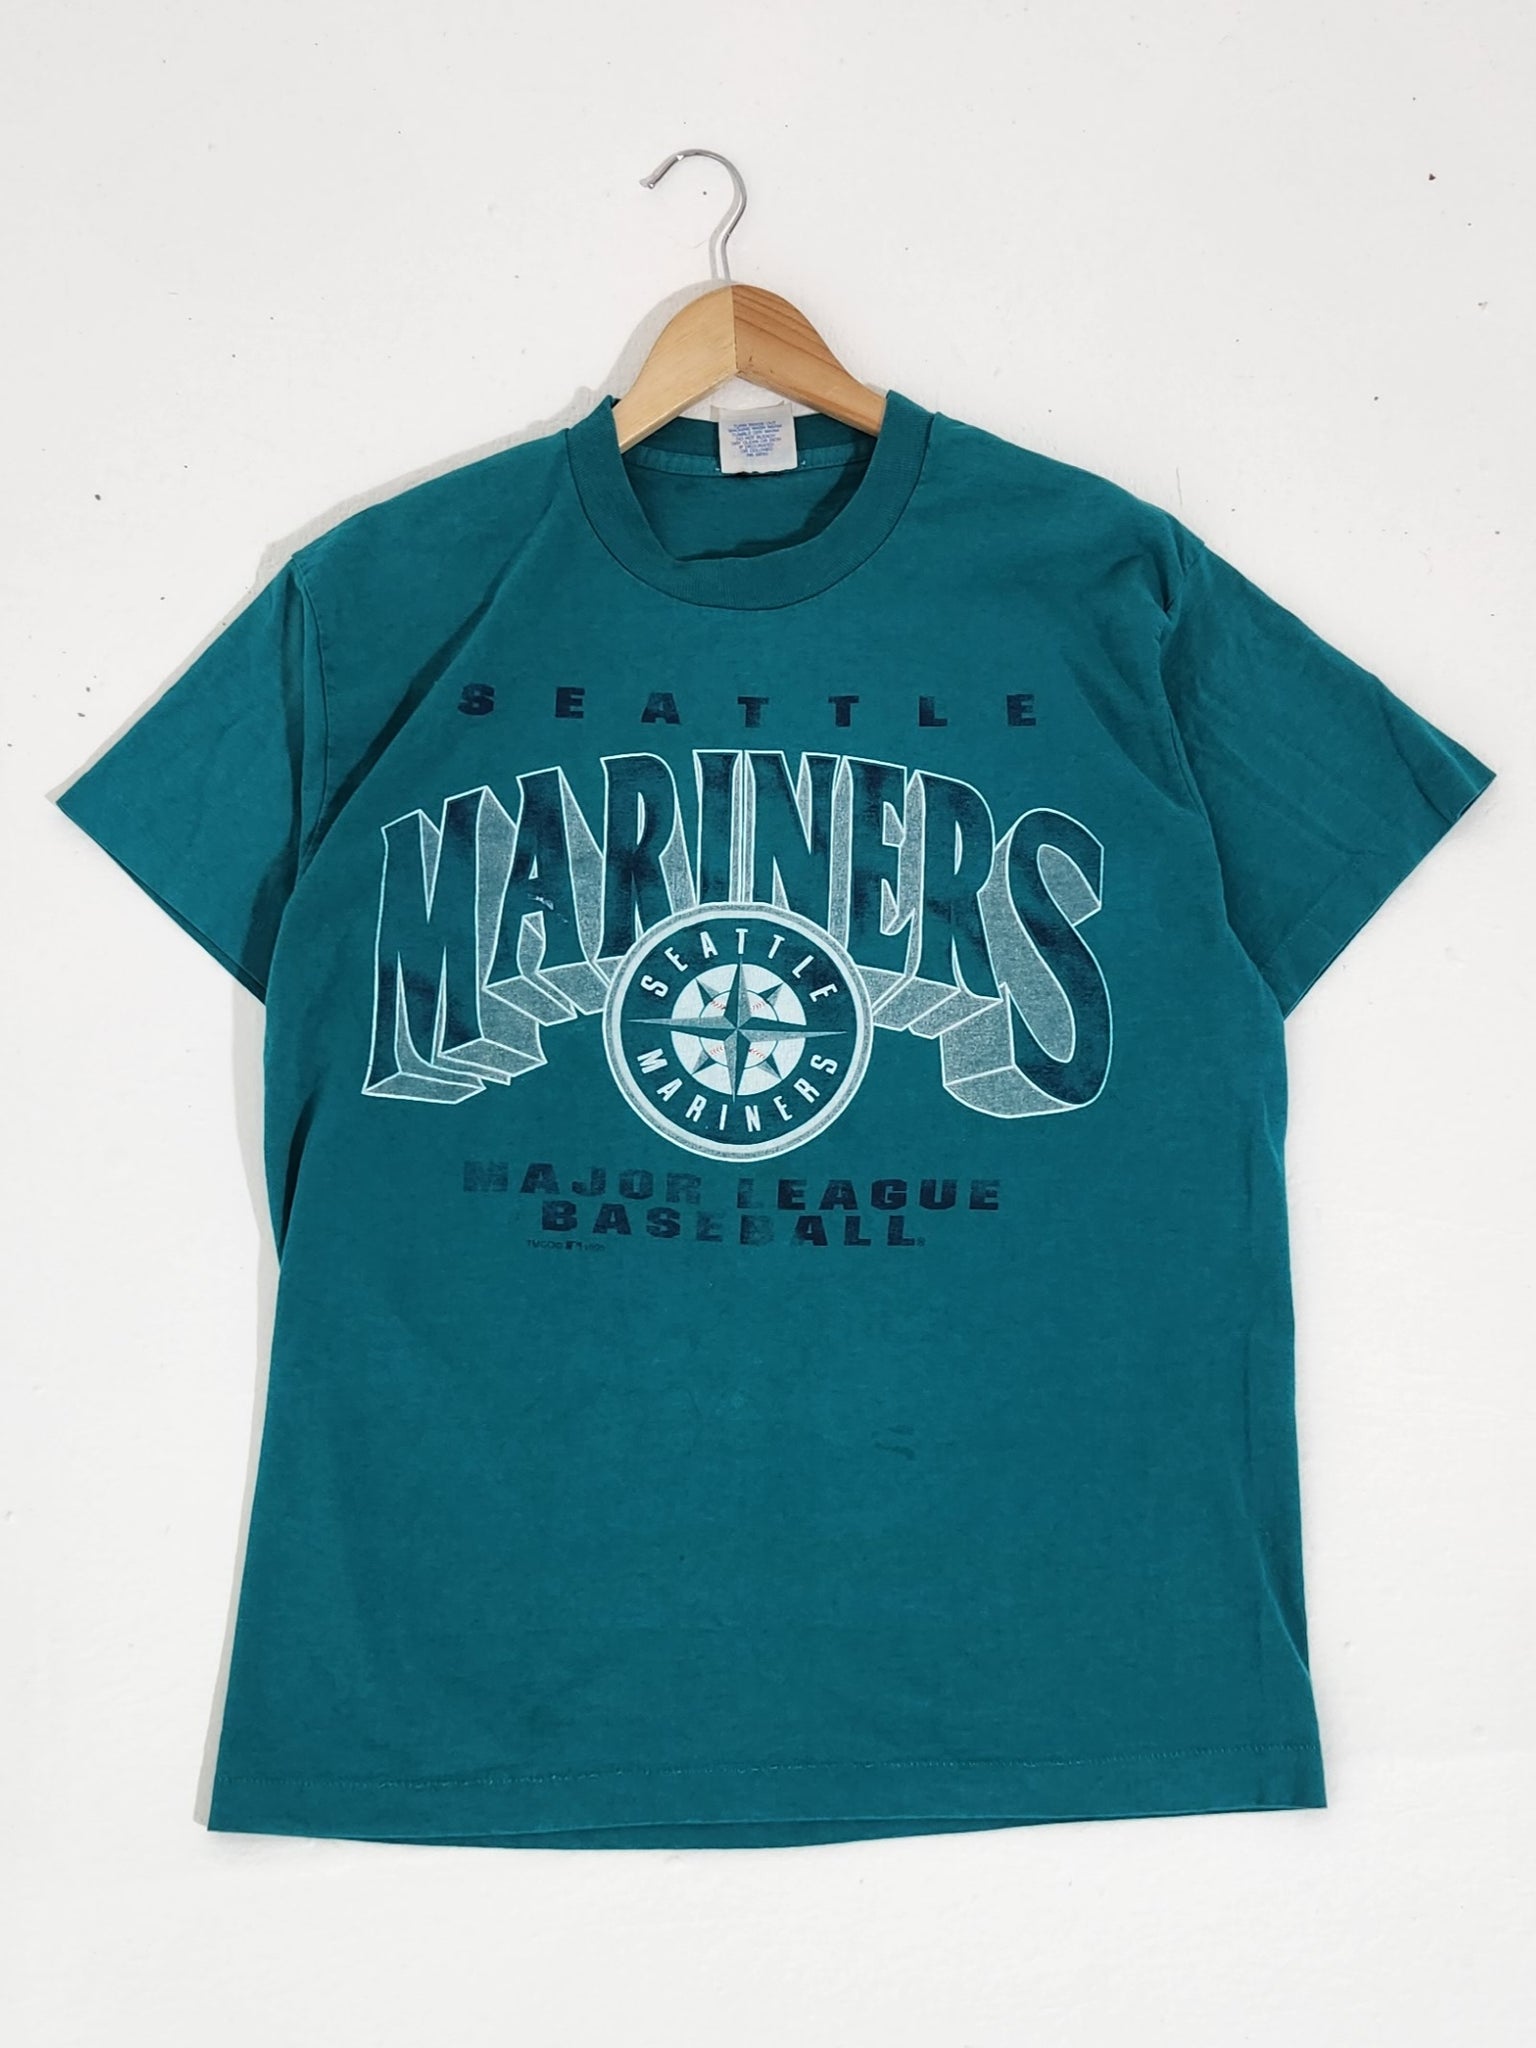 Vintage 1995 Seattle Mariners Baseball T-Shirt Sz. L